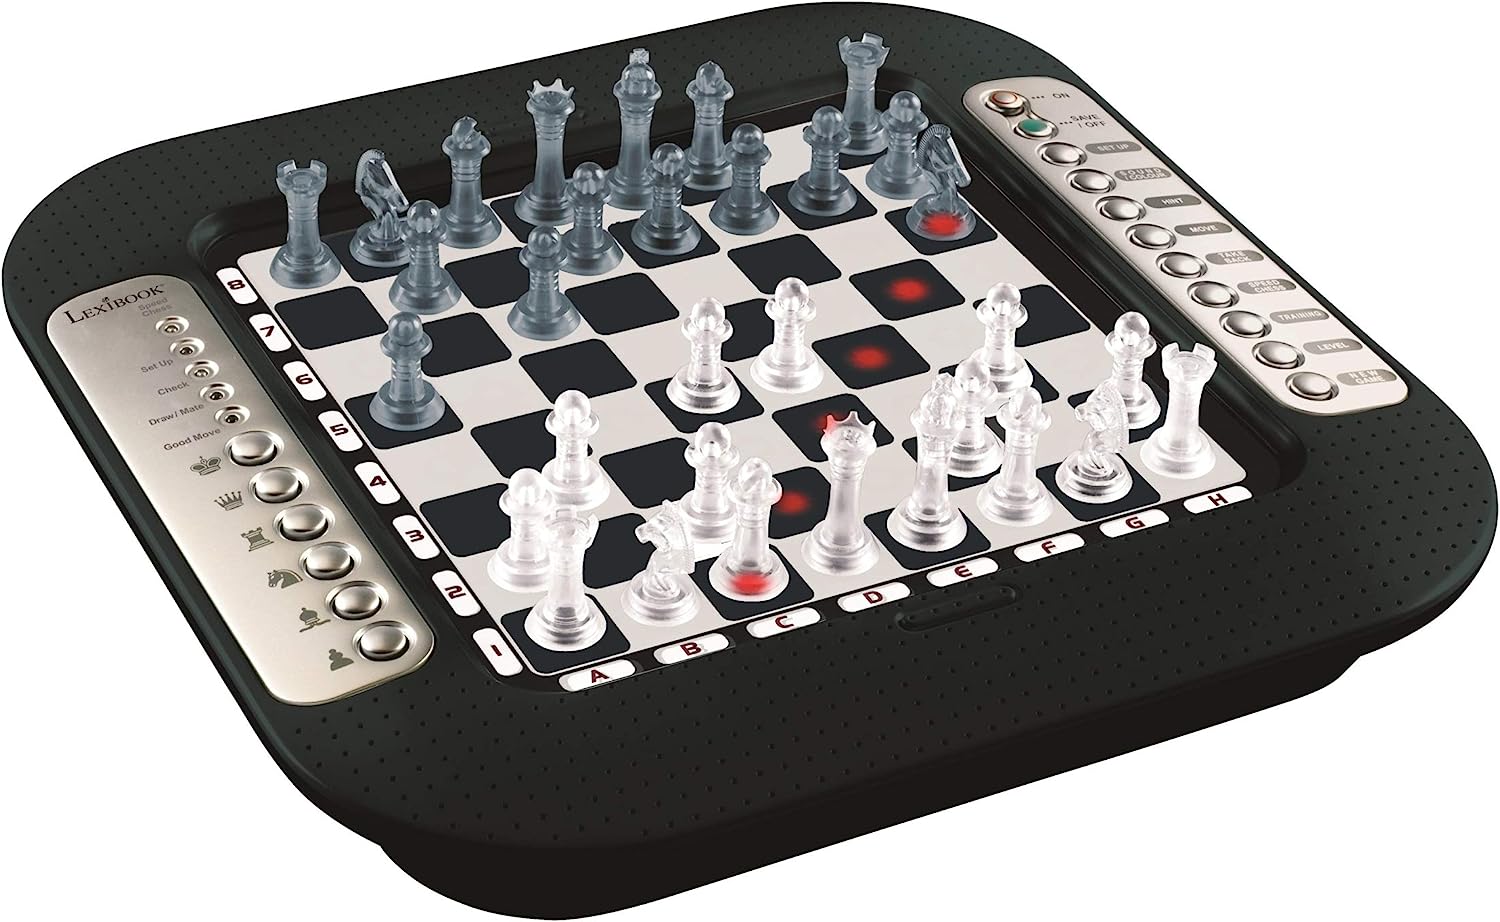 Ver categoría de ajedrez electrónico lexibook cg1335